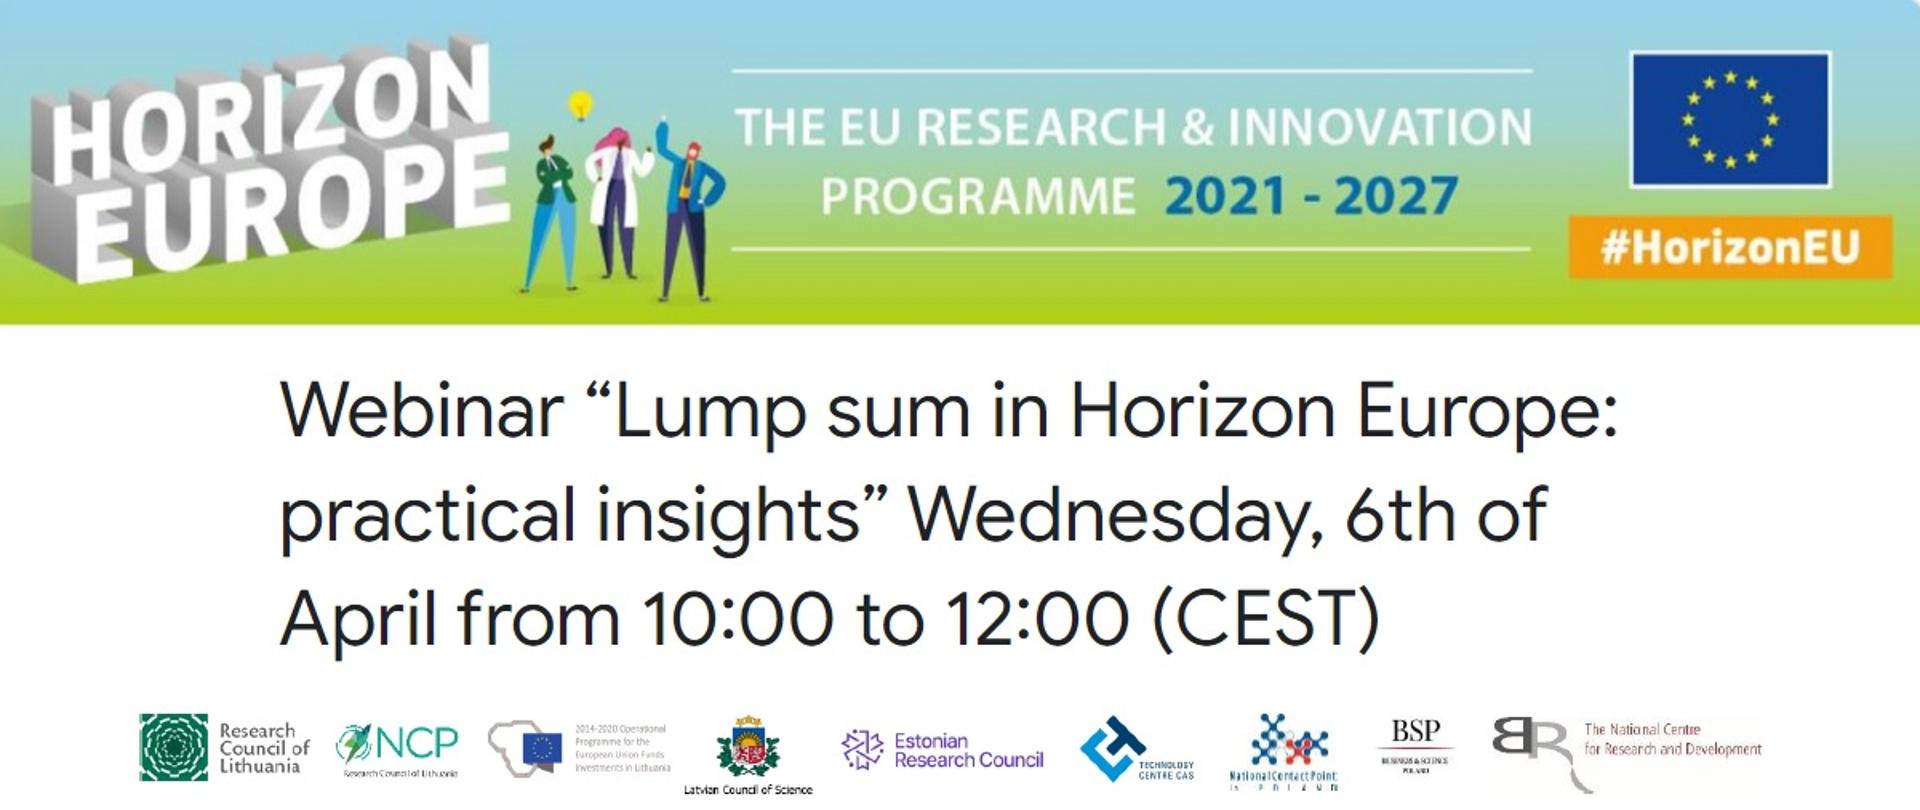 Webinar: “Lump sum in Horizon Europe: practical insights”